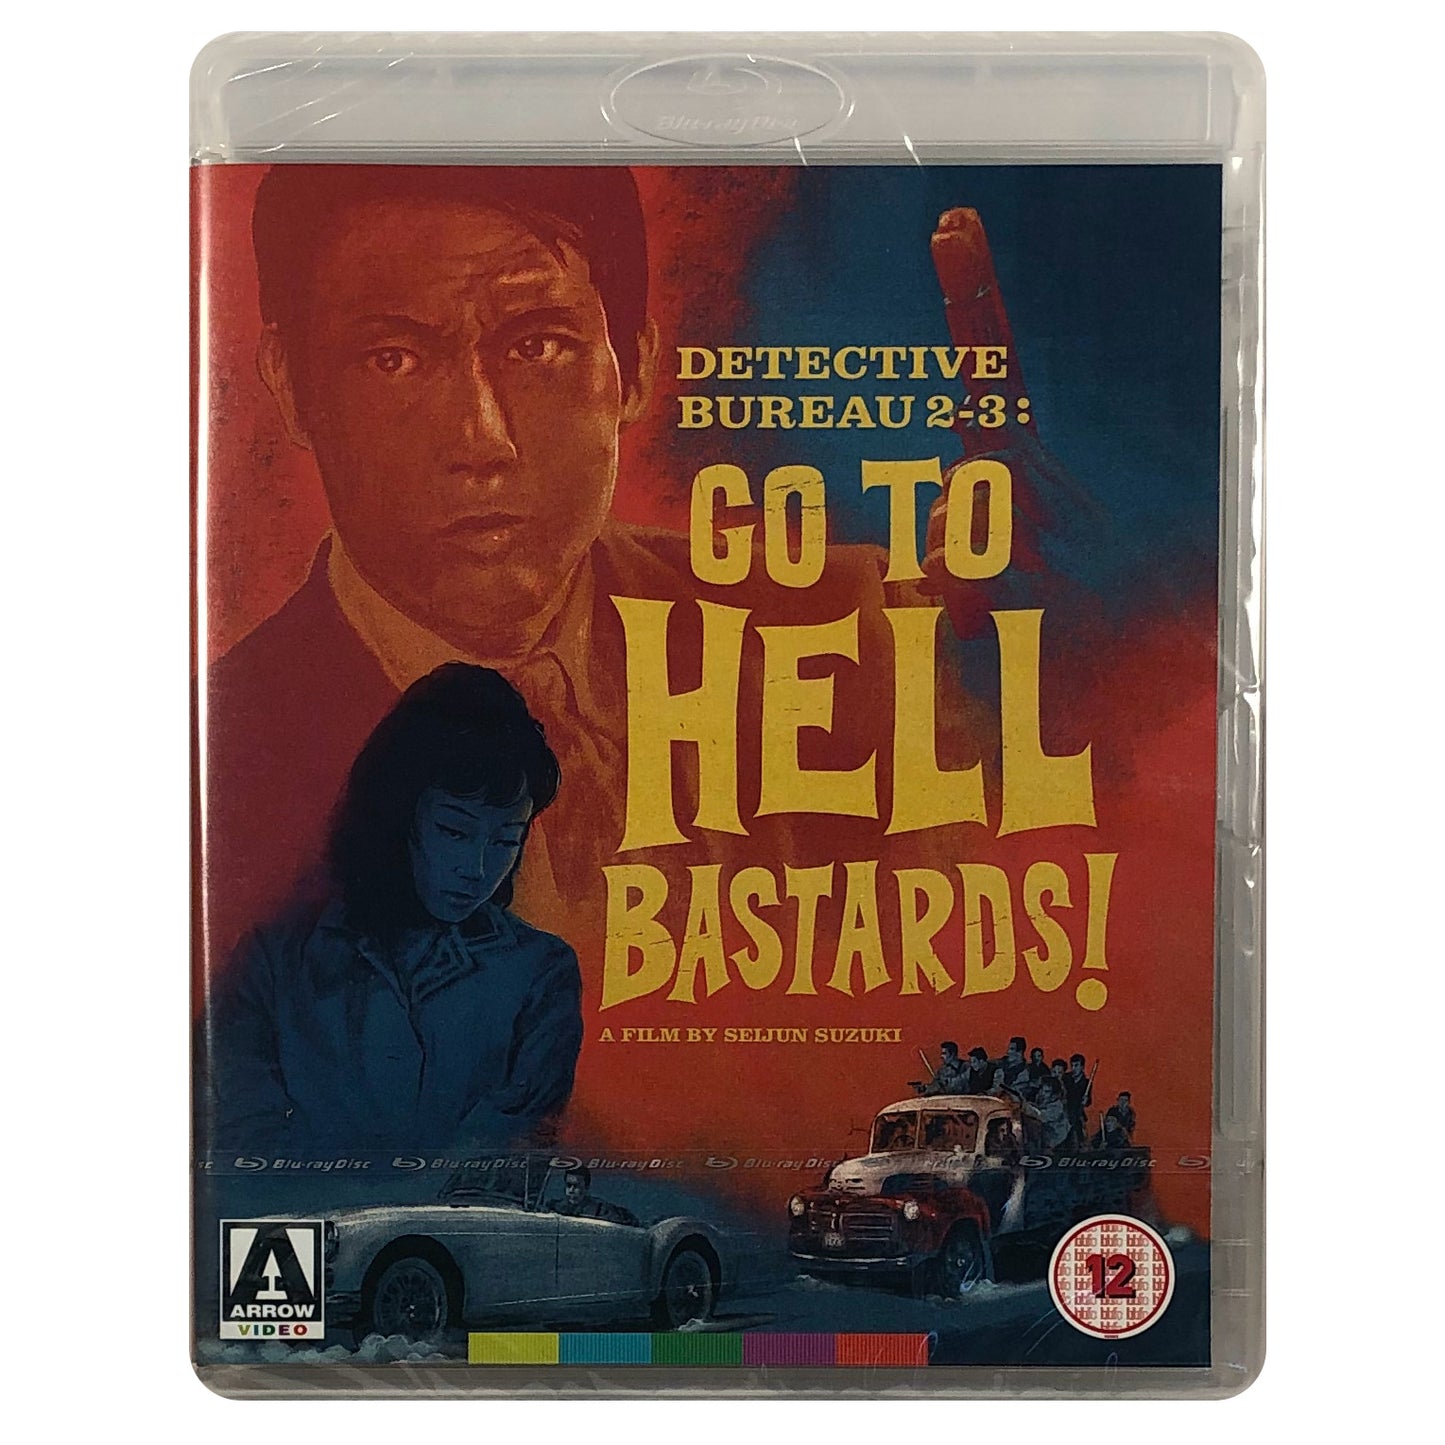 Detective Bureau 2-3: Go To Hell Bastards! Blu-Ray